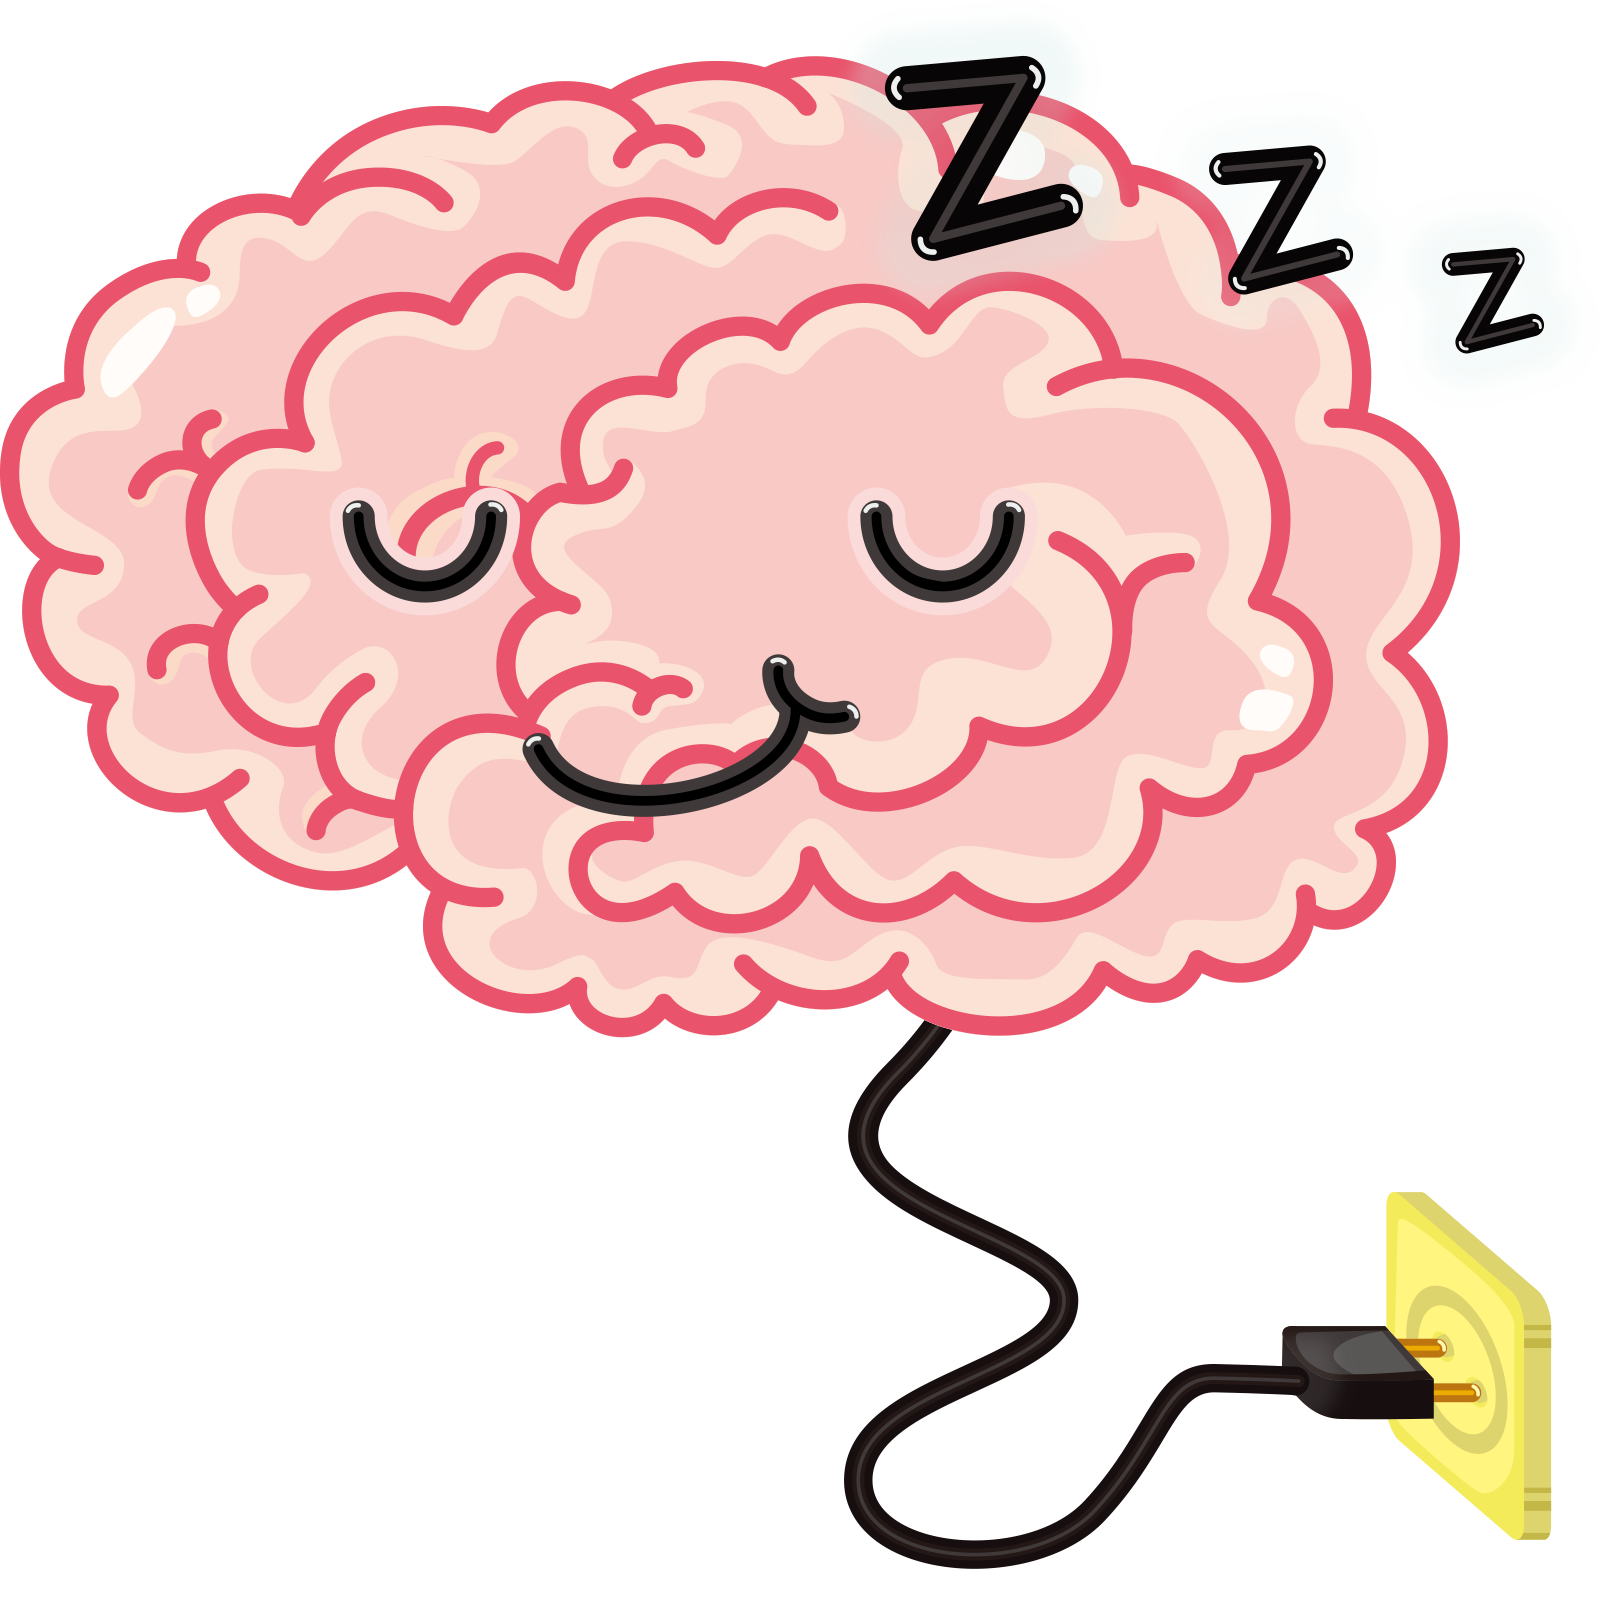 Brain Cartoon Sleep Clip art - Vector brain Charge png download - 1600*